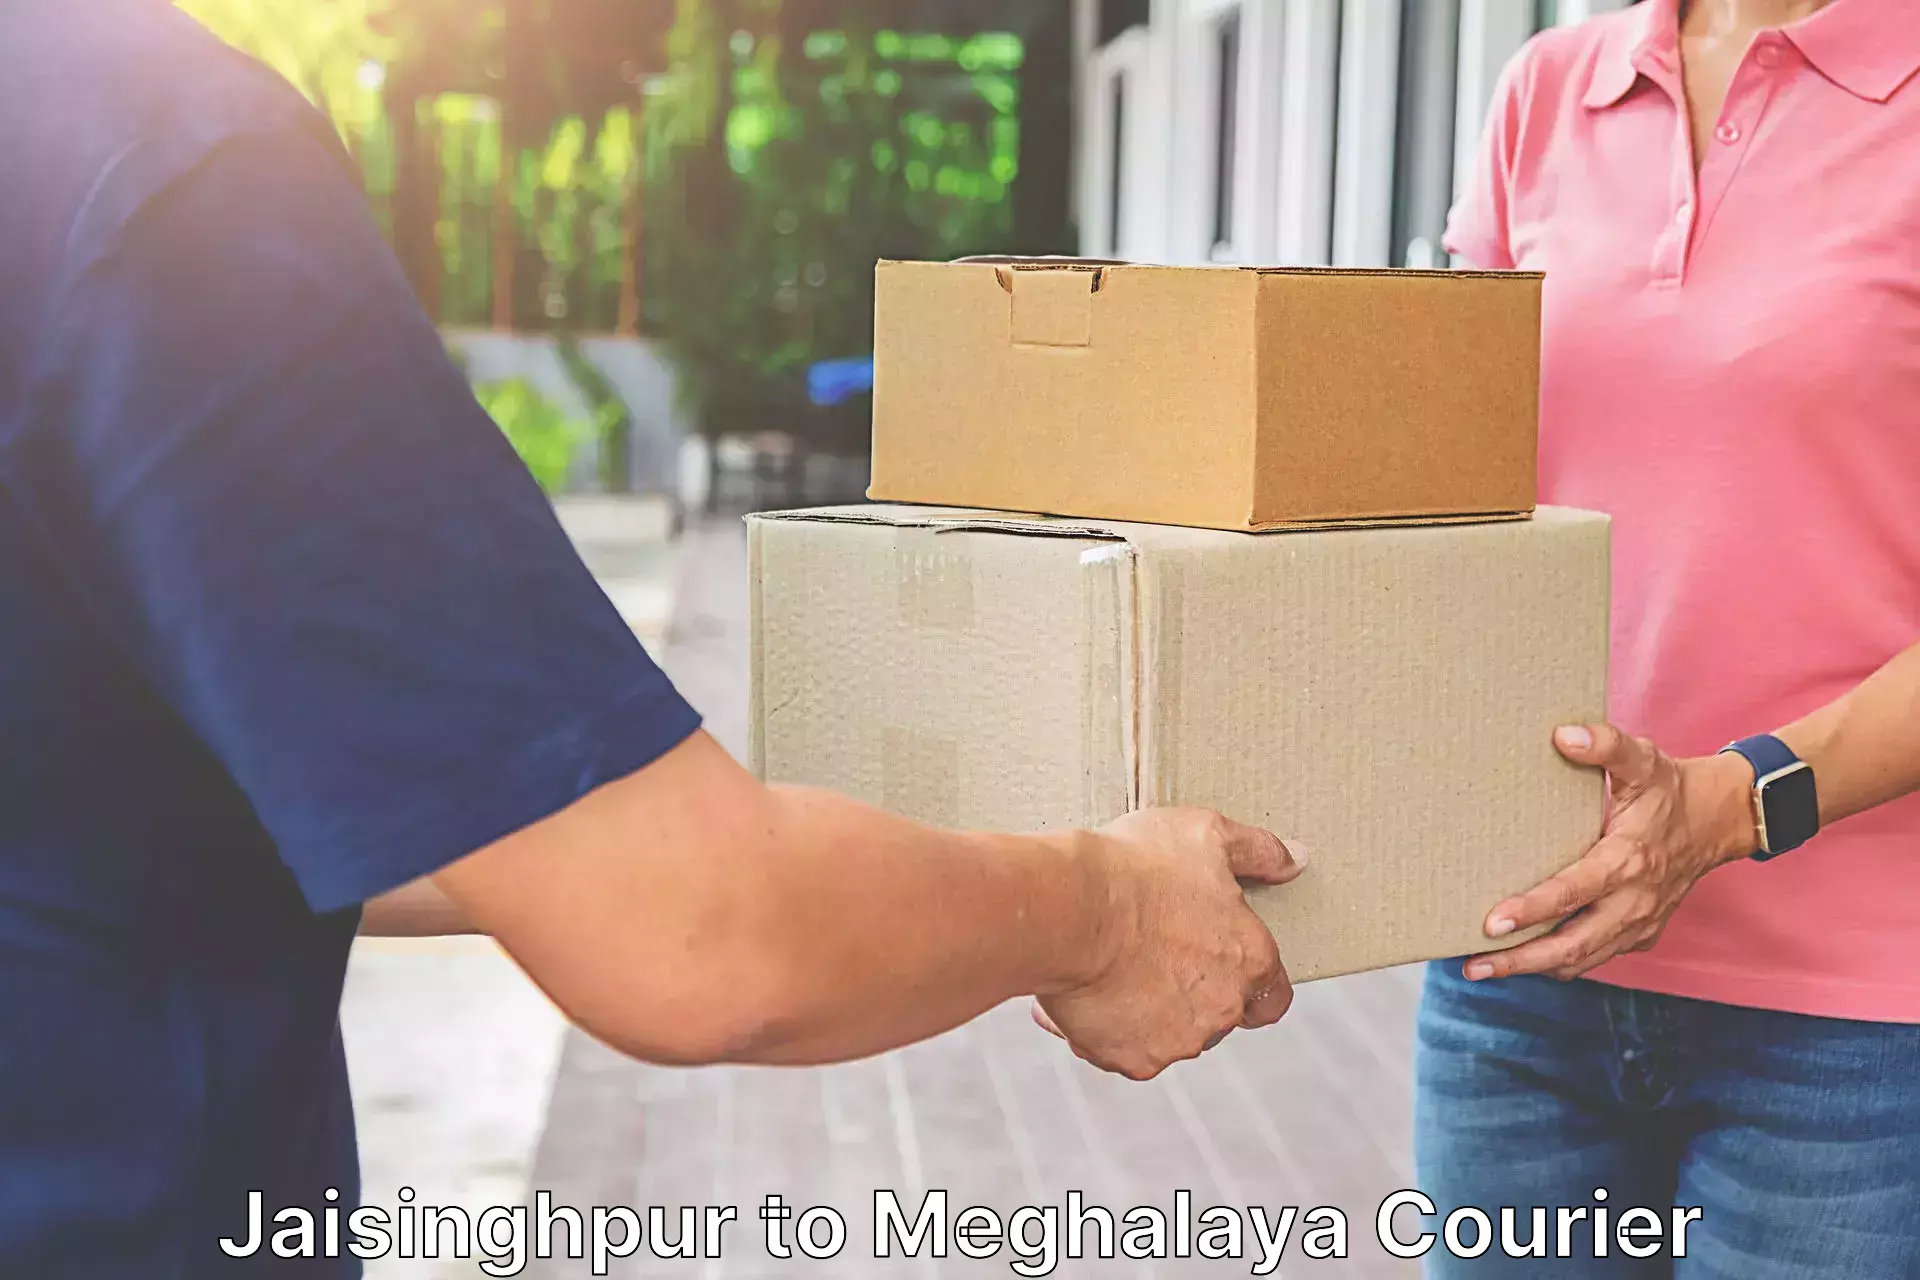 Nationwide courier service Jaisinghpur to Umsaw